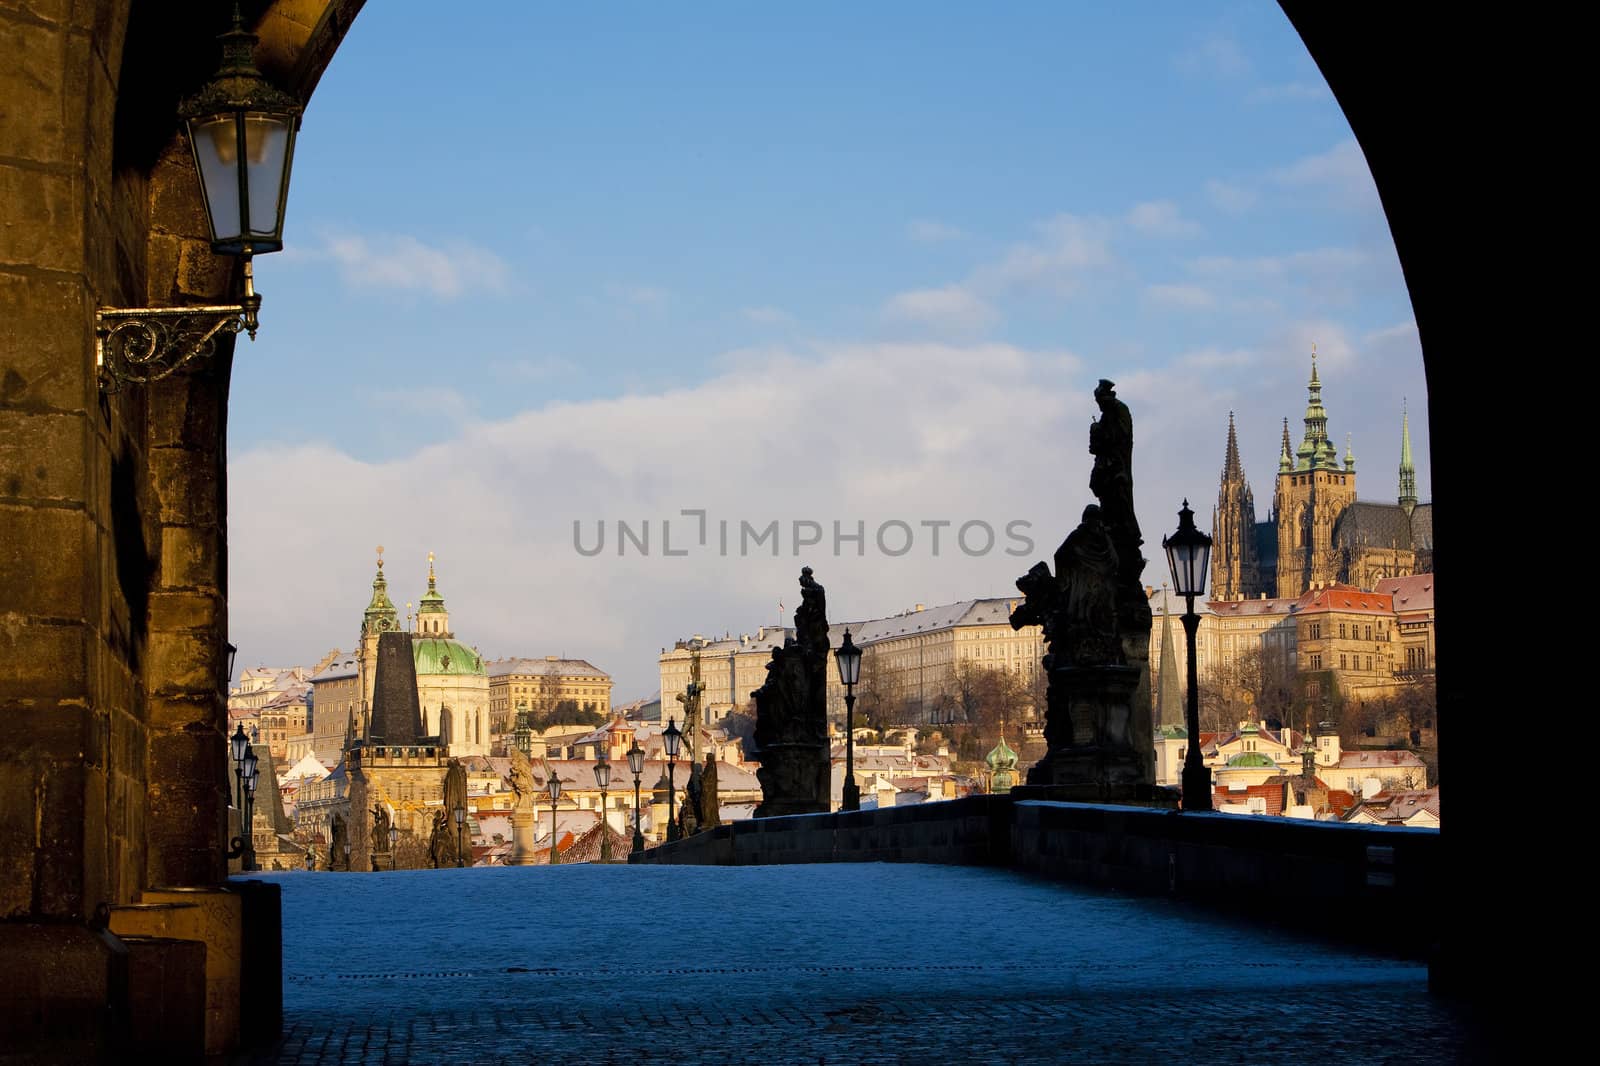 Charles Bridge in winter, Prague, Czech Republic